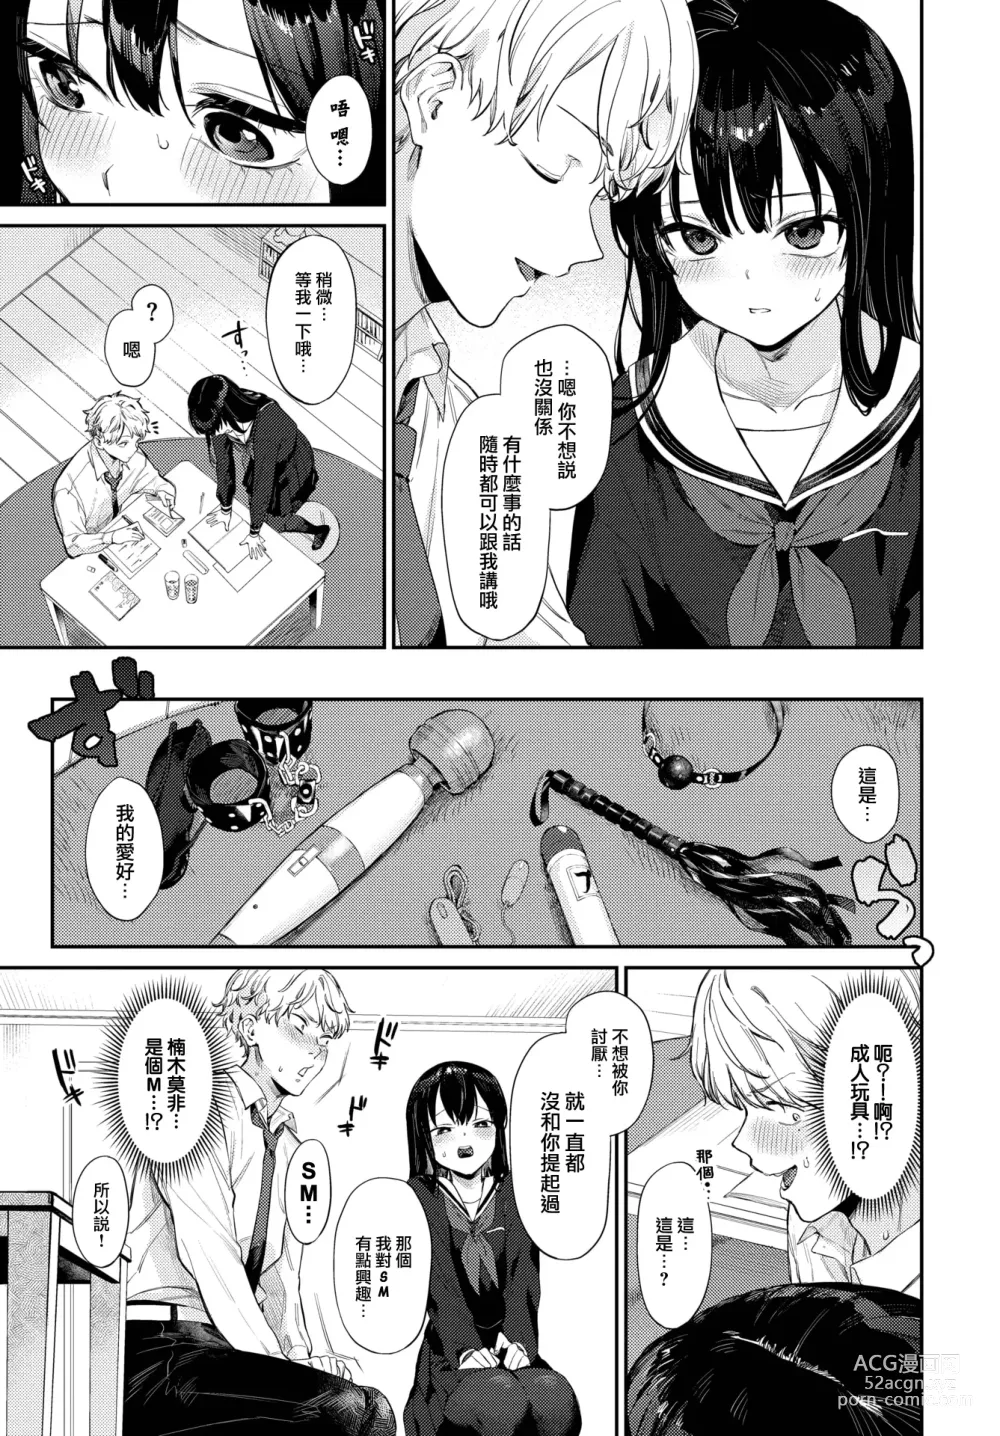 Page 6 of manga Muttsuri Bloom